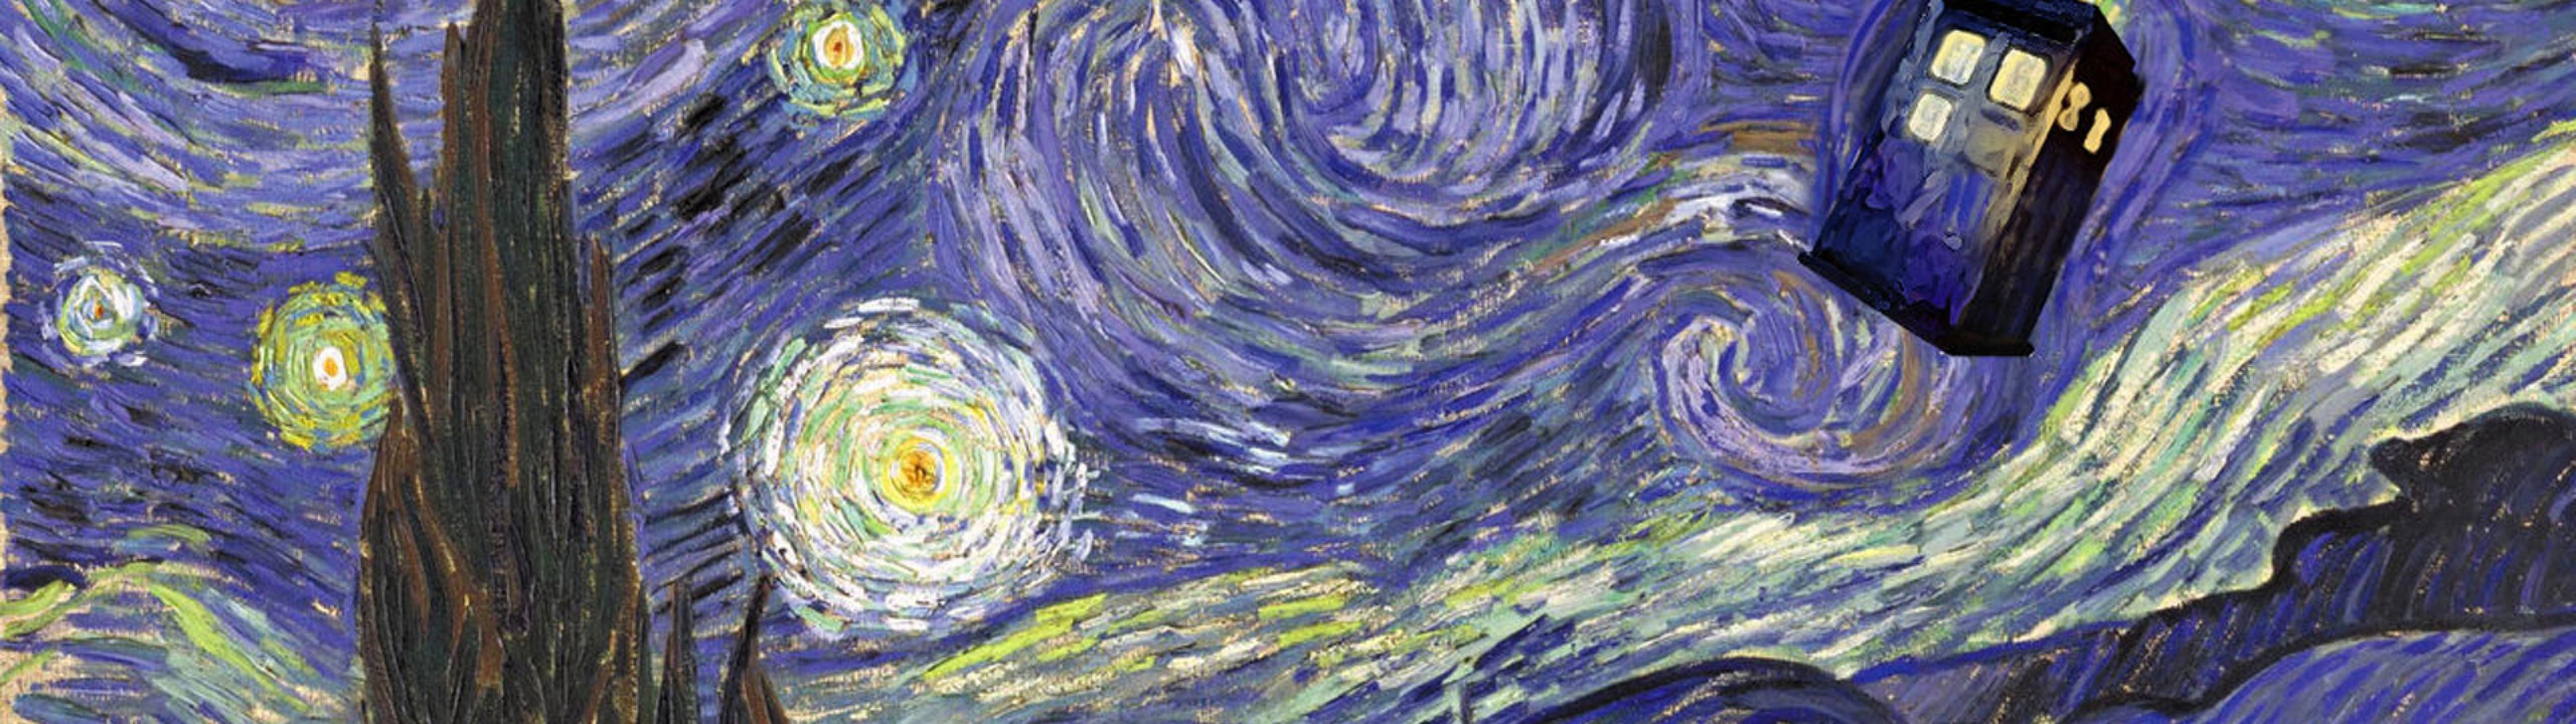 Van Gogh Desktop Wallpapers - Van Gogh - HD Wallpaper 